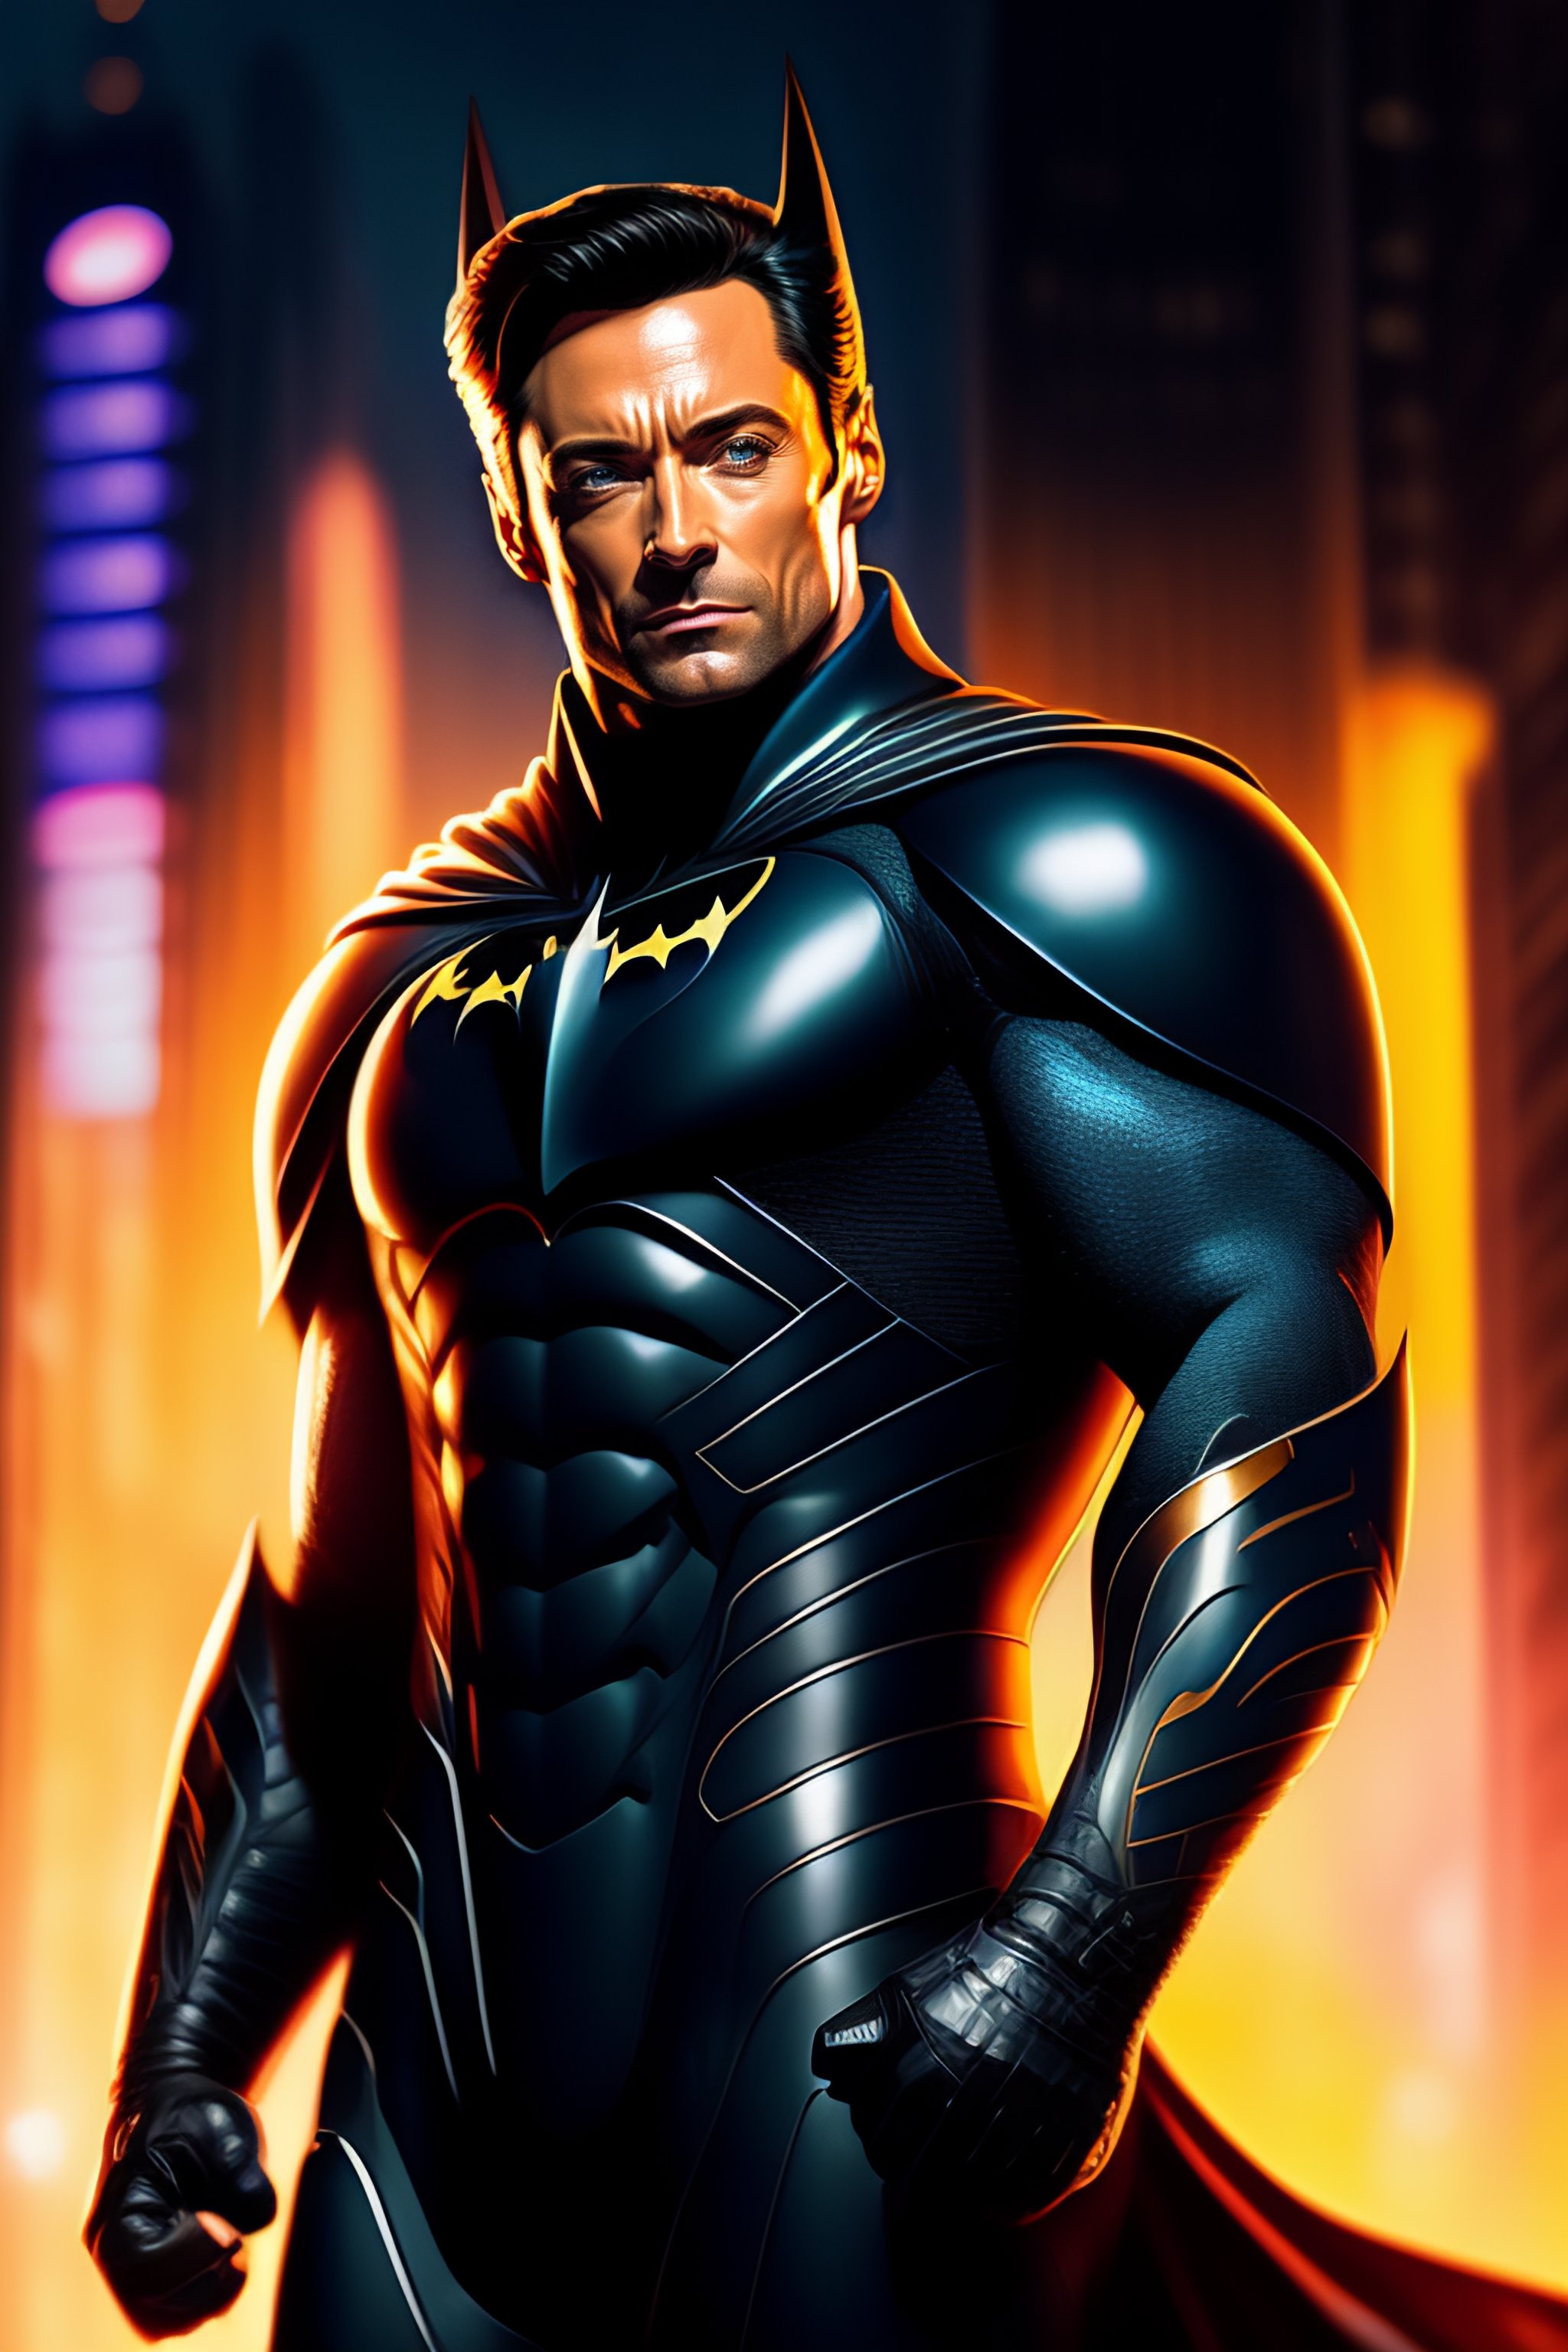 Lexica - Hugh jackman as bruce wayne with batsuit in batman movie, full ...